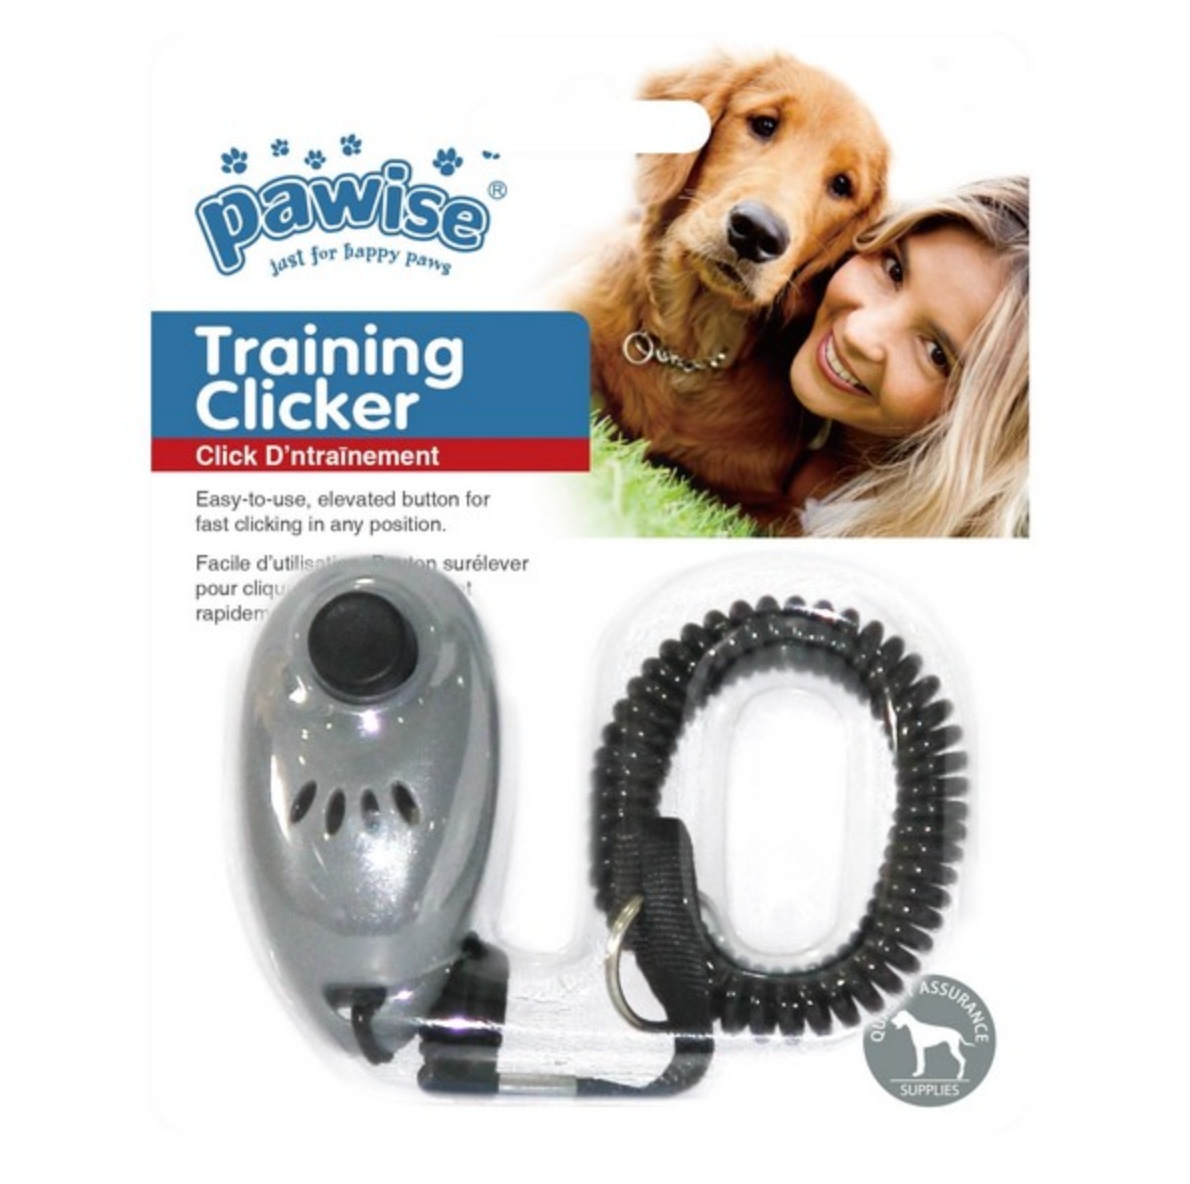 Pawise Dog Training Clicker